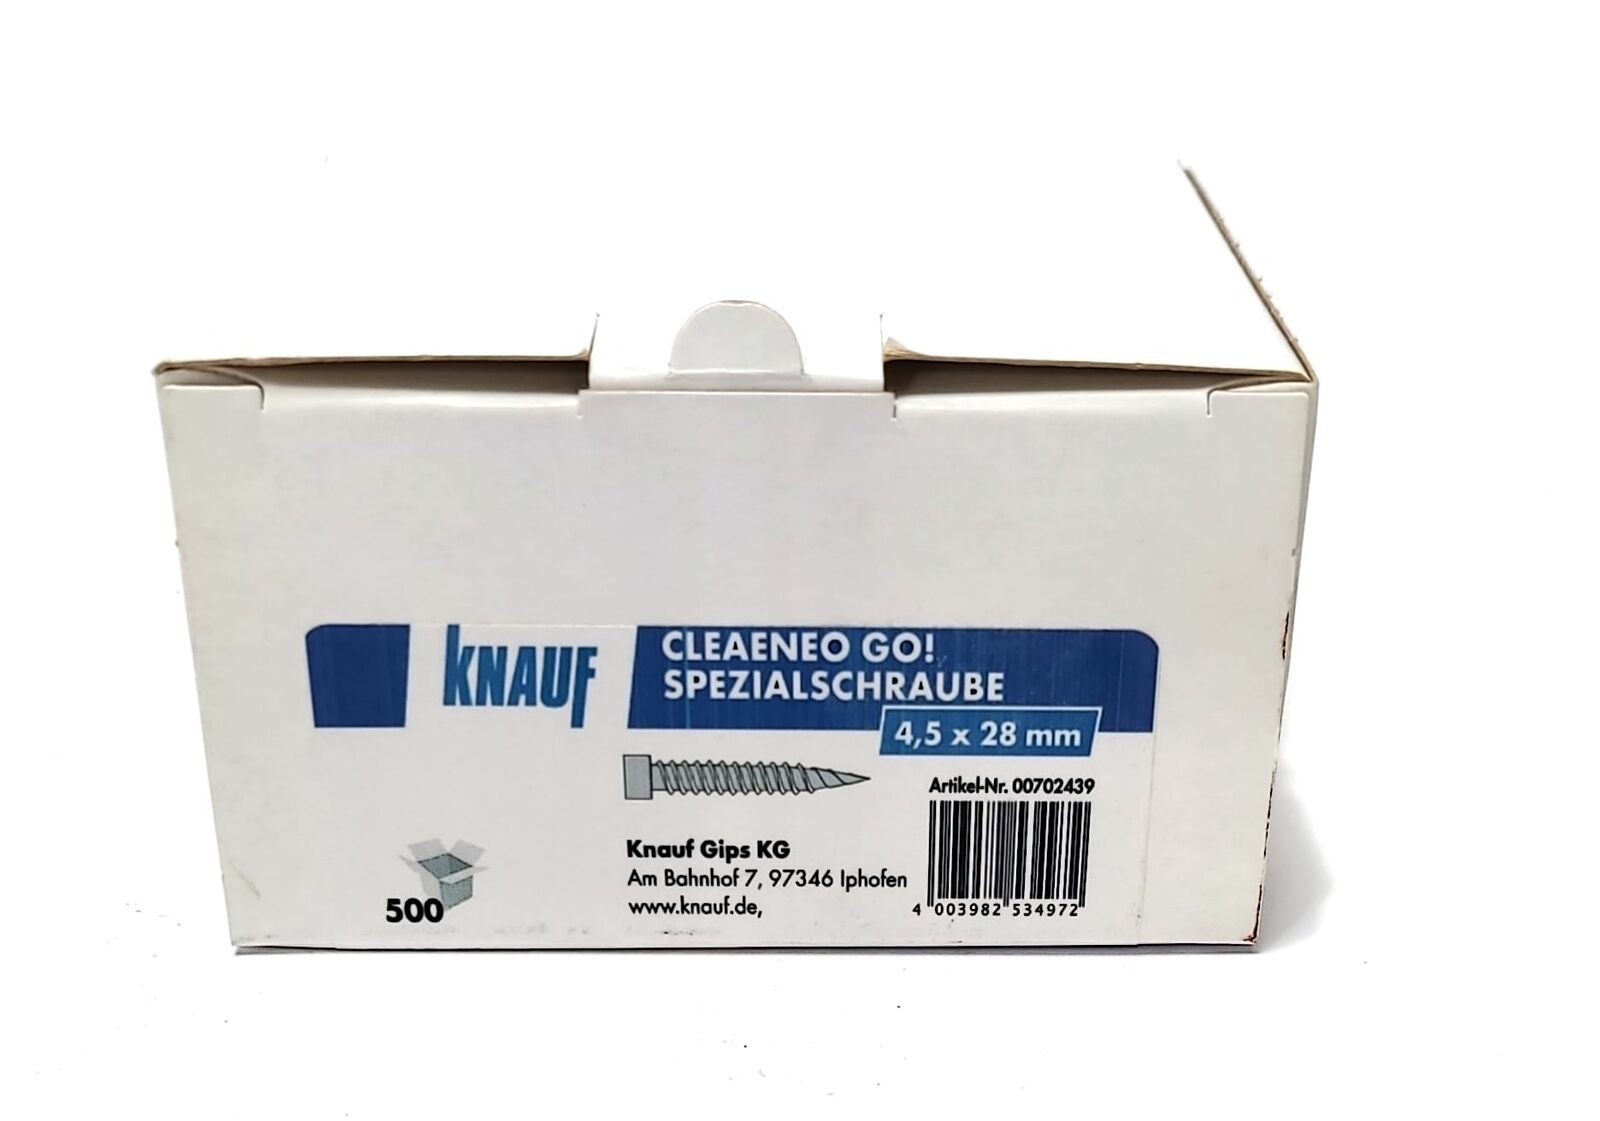 Knauf Cleaneo GO! Spezialschraube 4, 5 x 28 mm (500 Stk.)